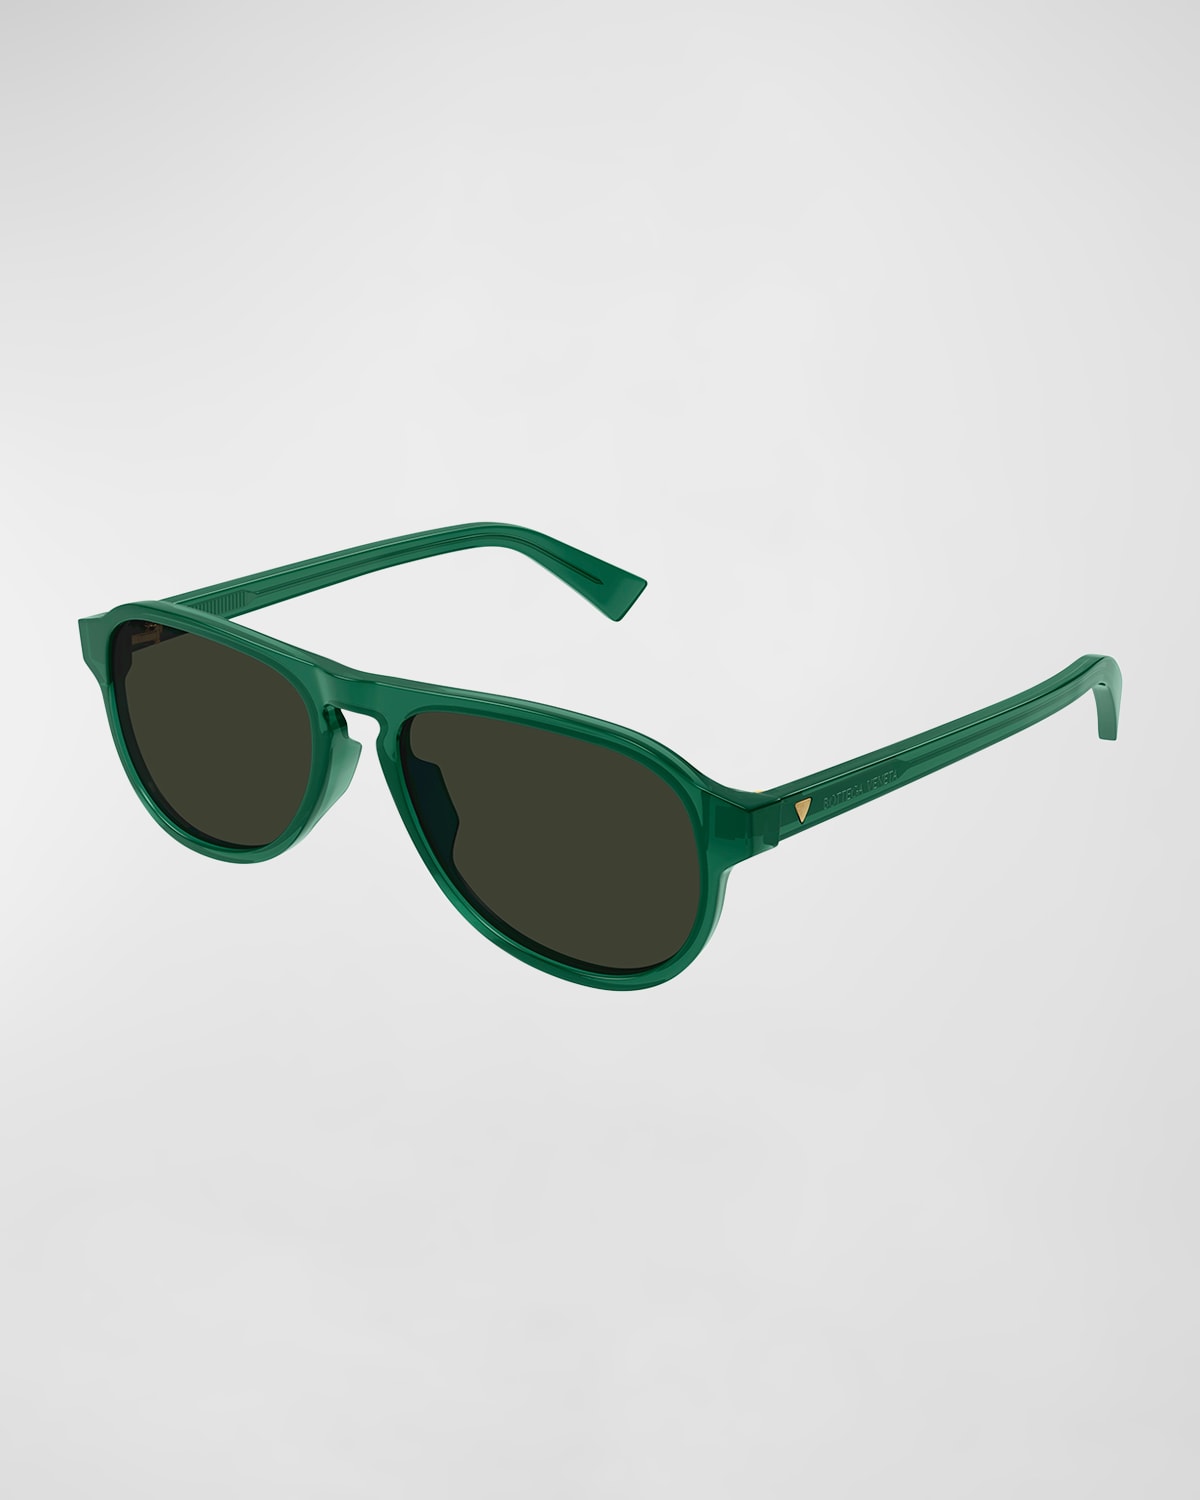 Men's Keyhole-Bridge Acetate Oval Sunglasses